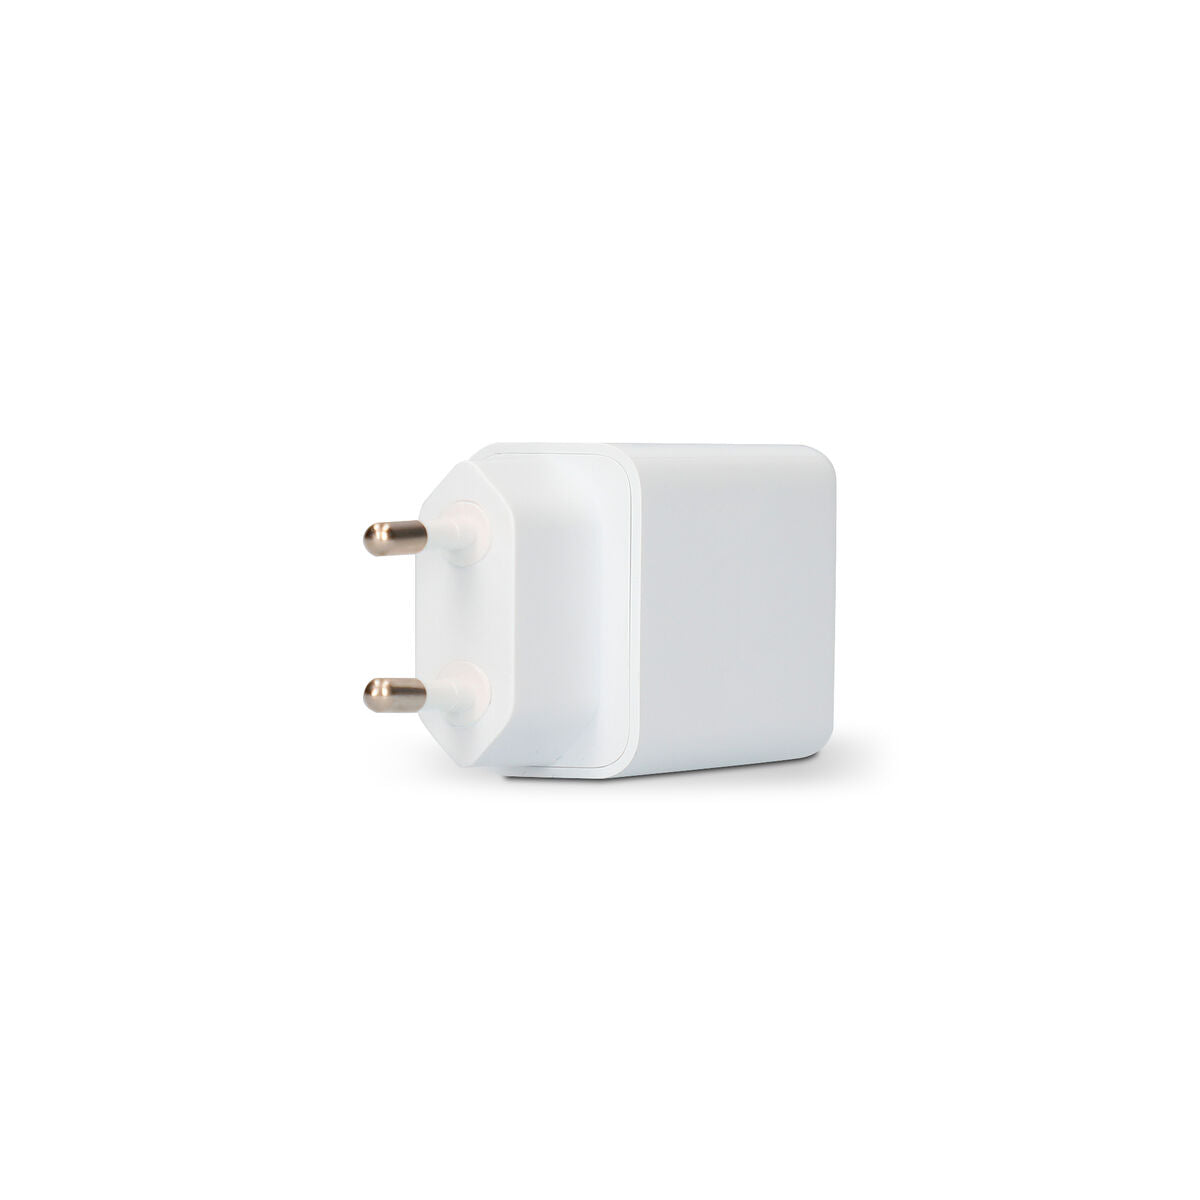 Caricatore a parete + cavo Lightning certificato MFI KSIX Compatibile Apple 2.4A USB iPhone